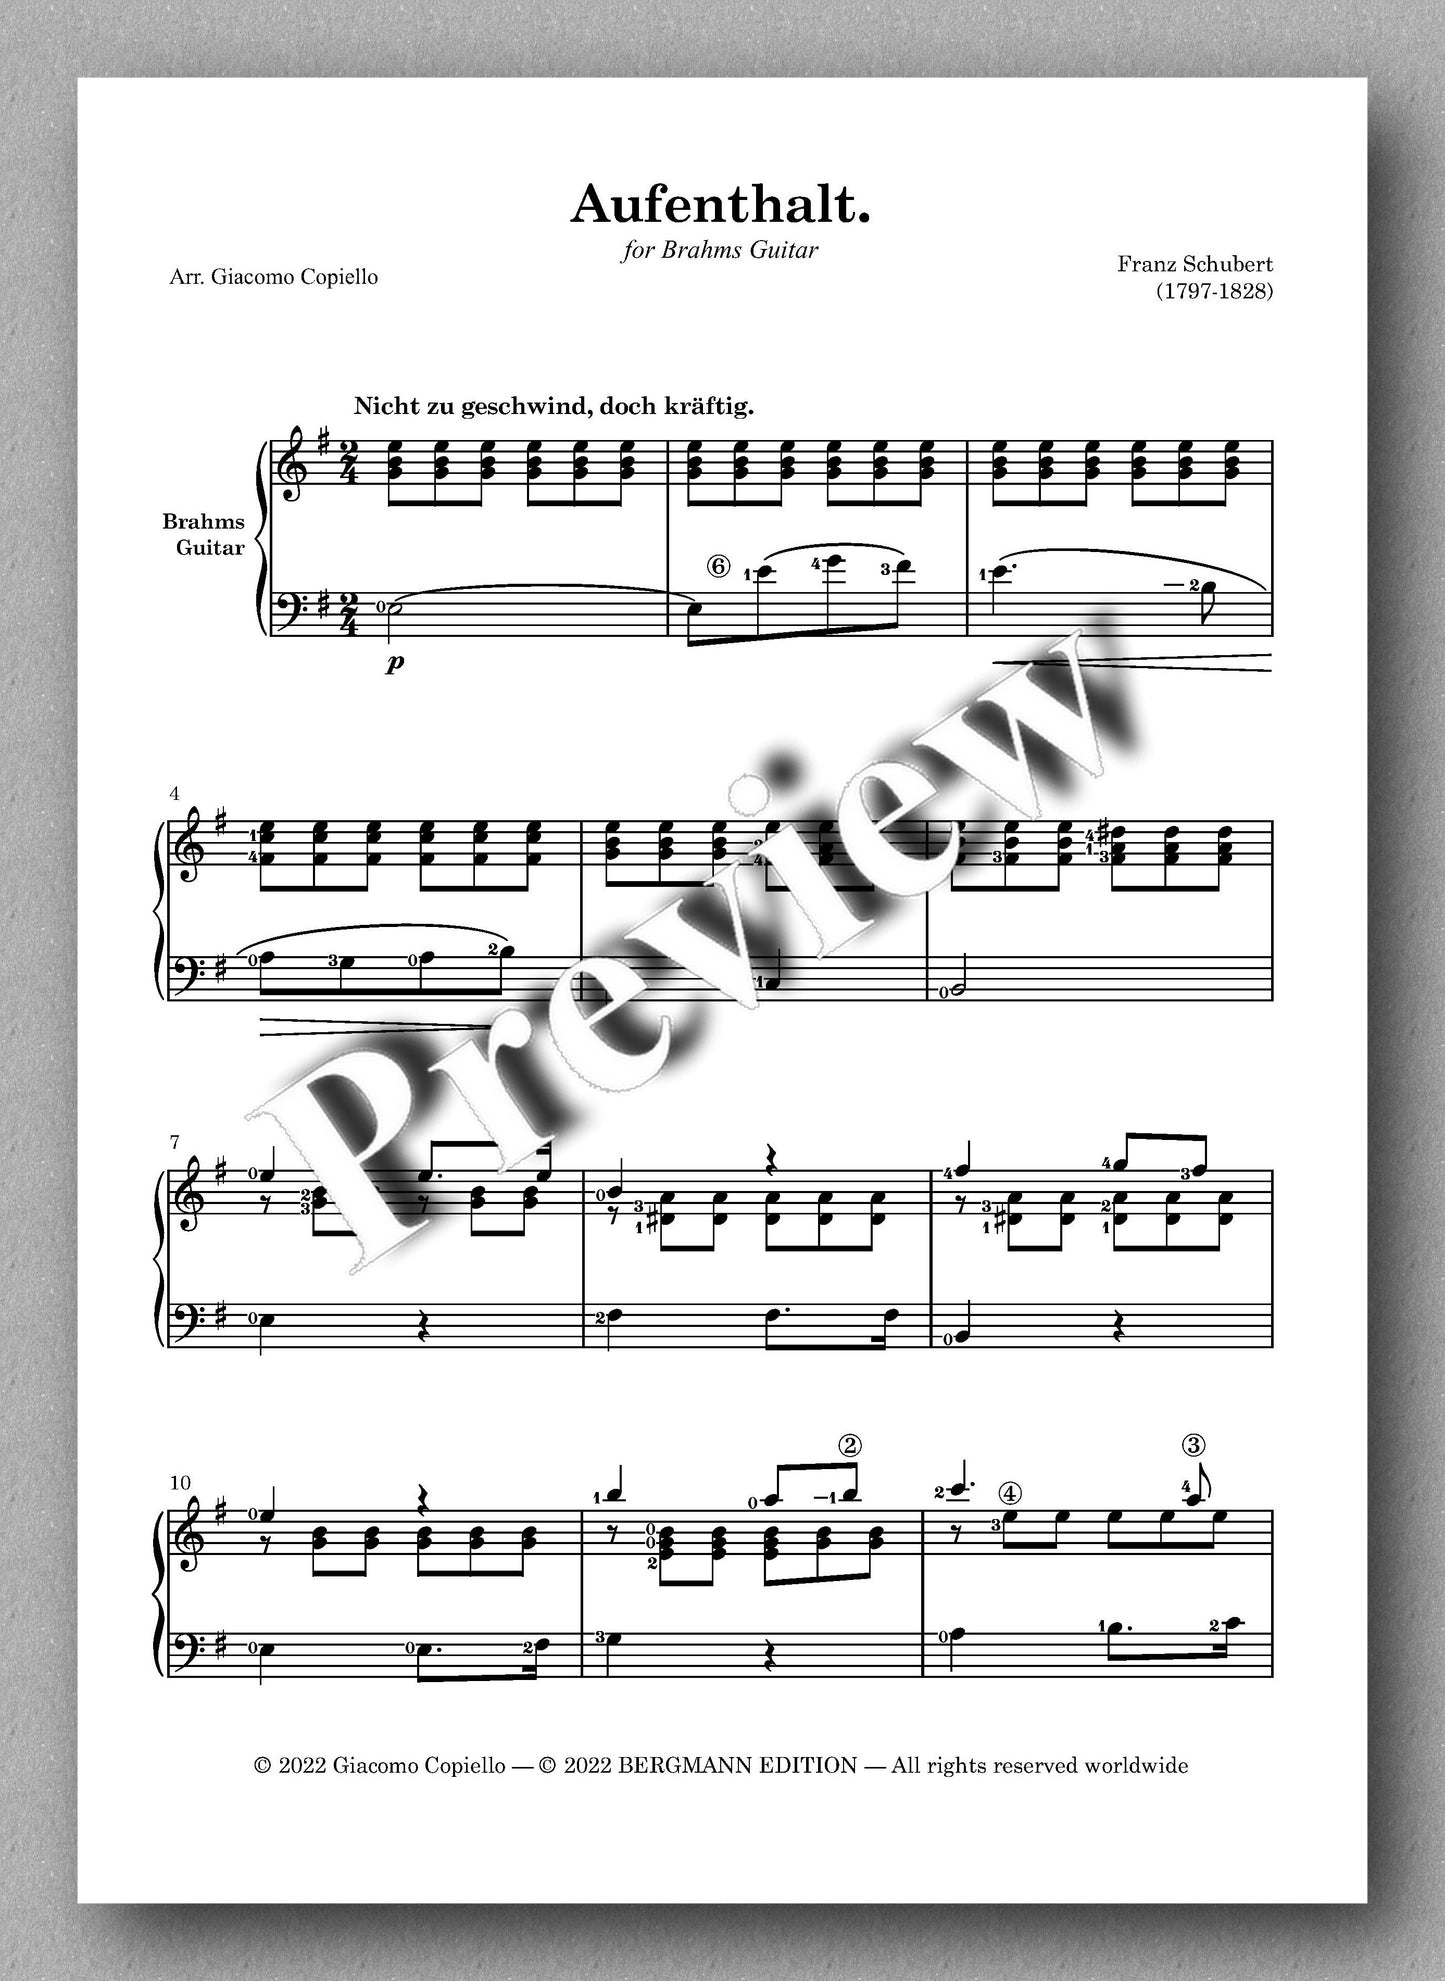 Lieder vol. 2, by Franz Schubert  - preview of the music score 3